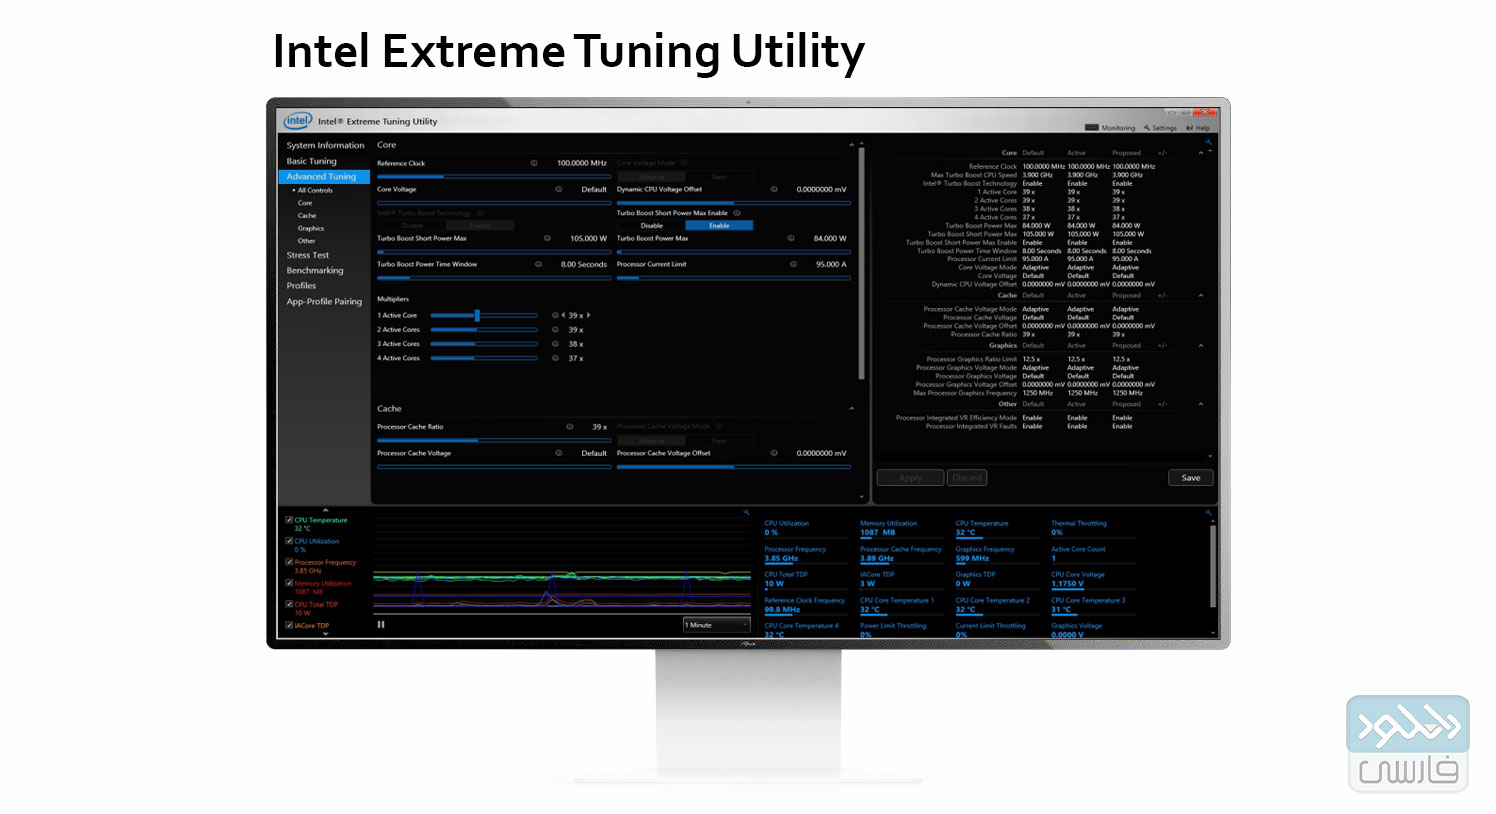 intel extreme tuning utility windows 7 32 bit